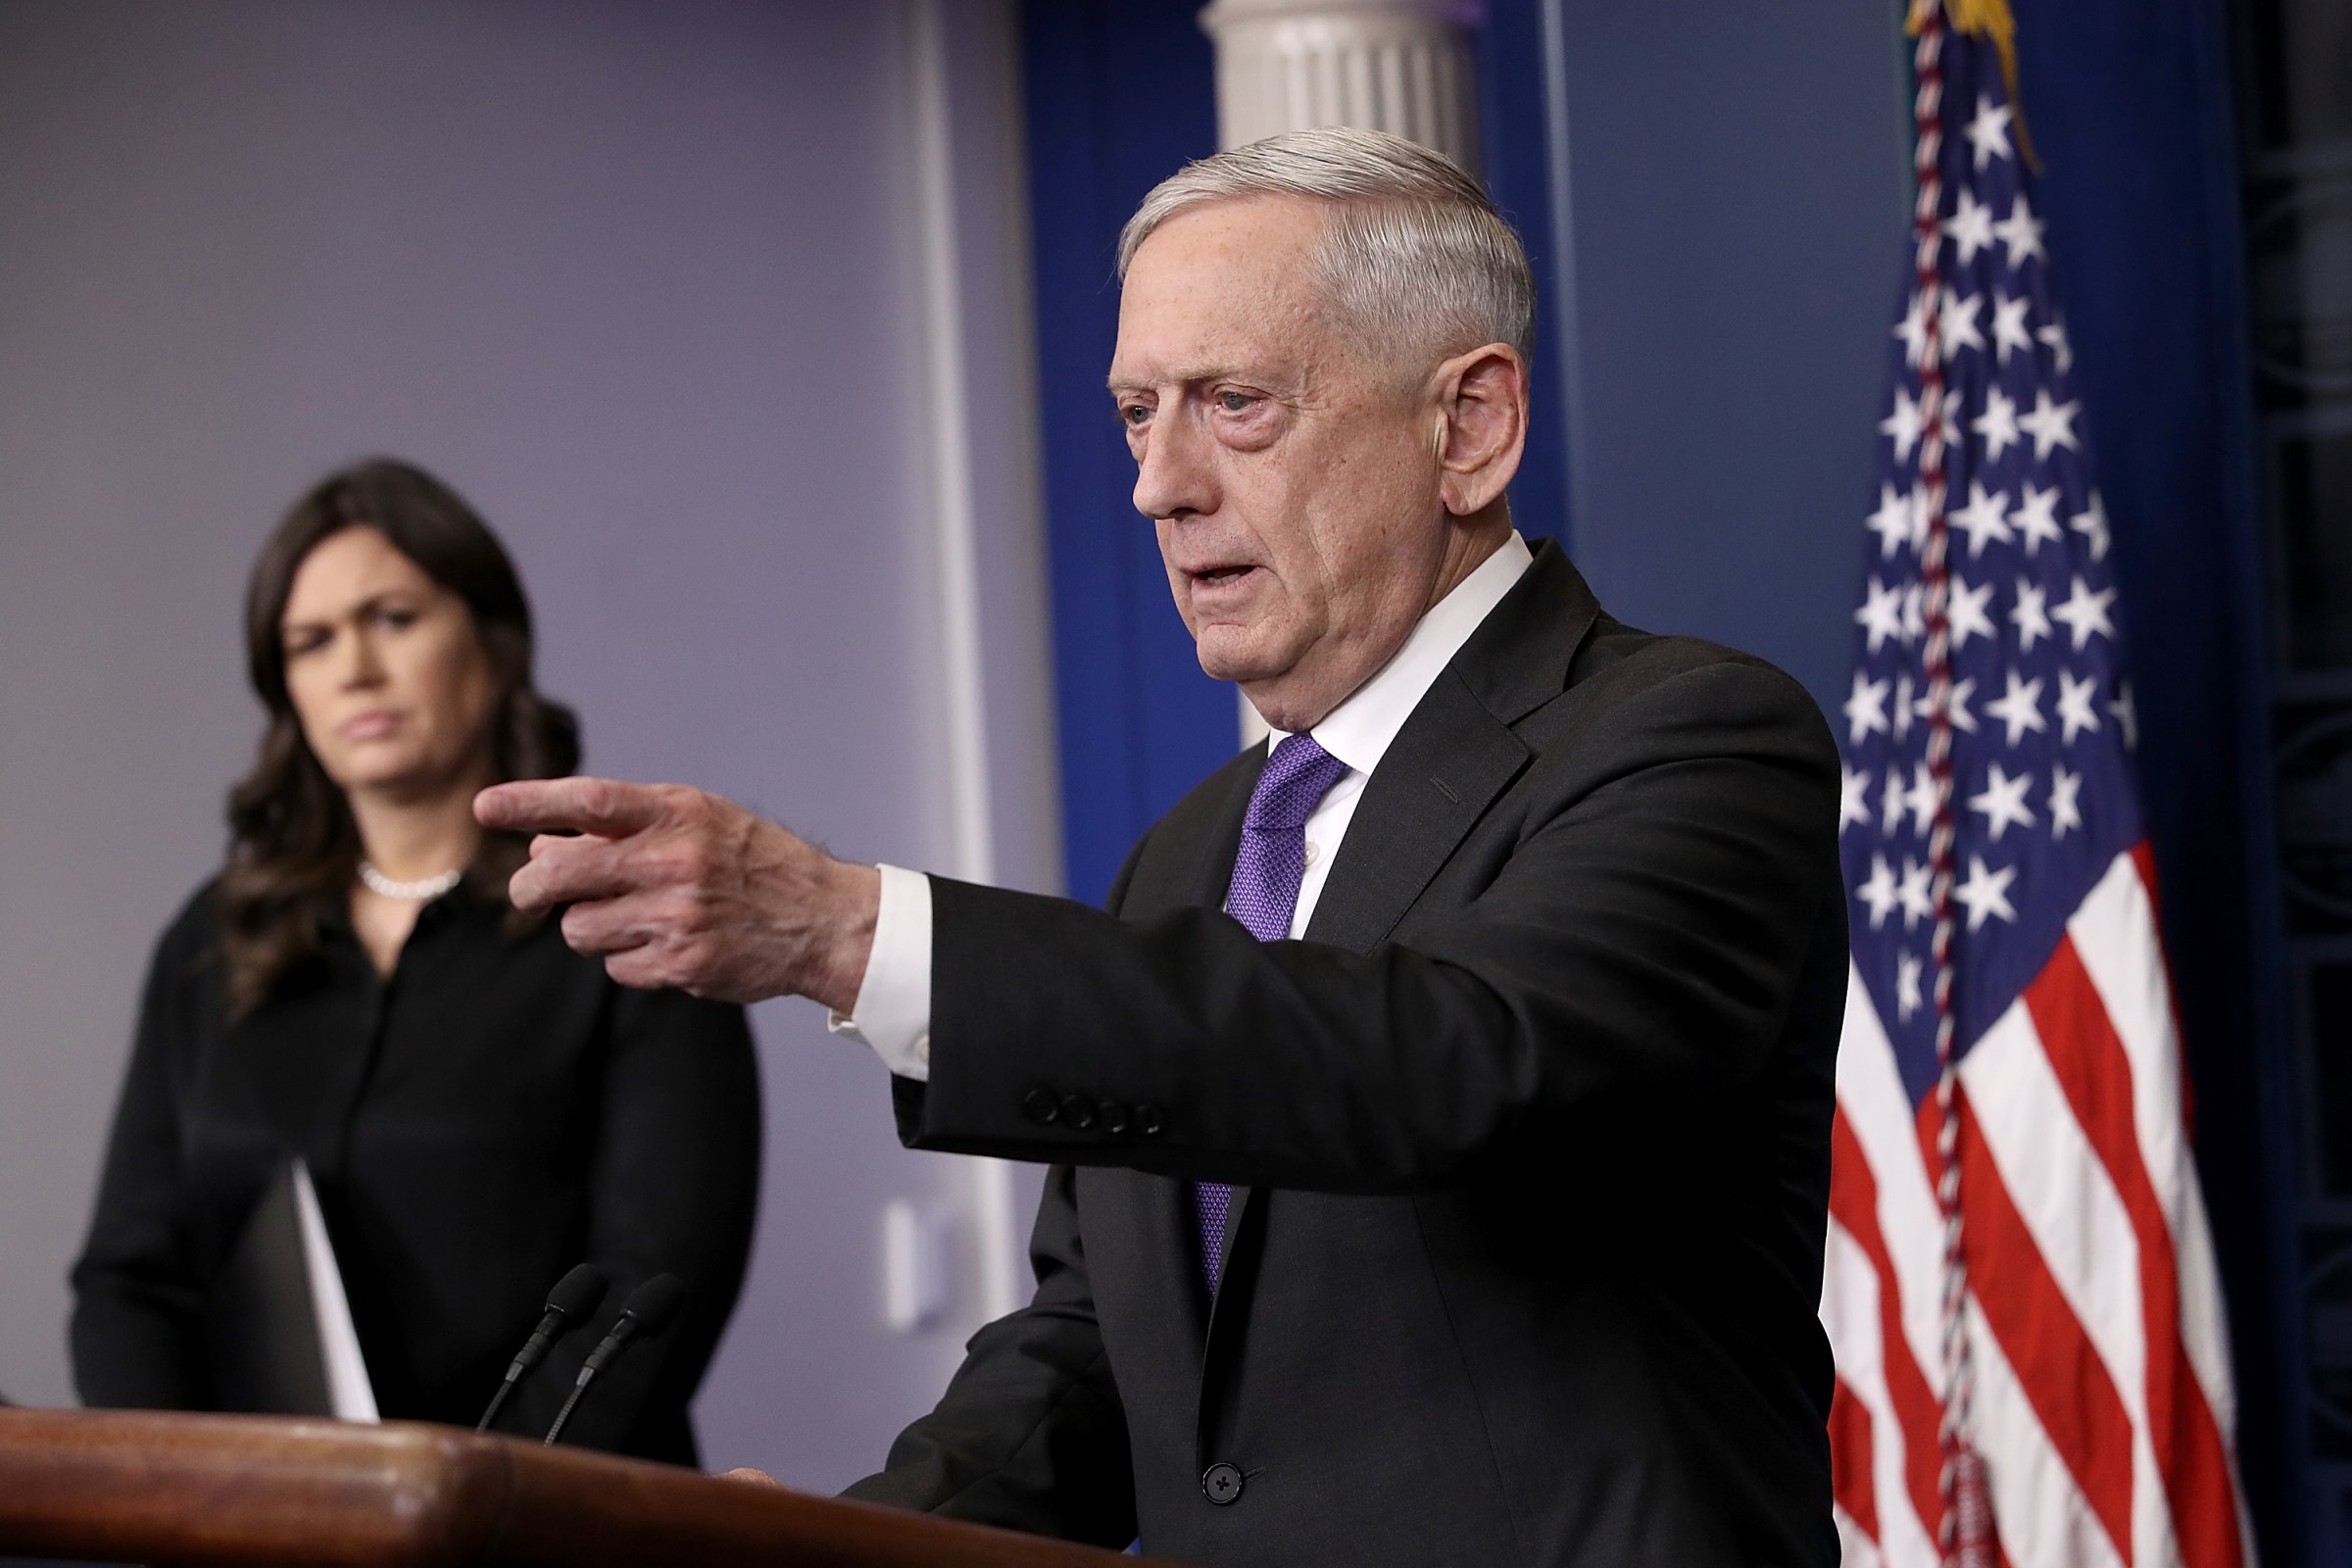 Defense Secretary Mattis Holds Media Briefing At The White House